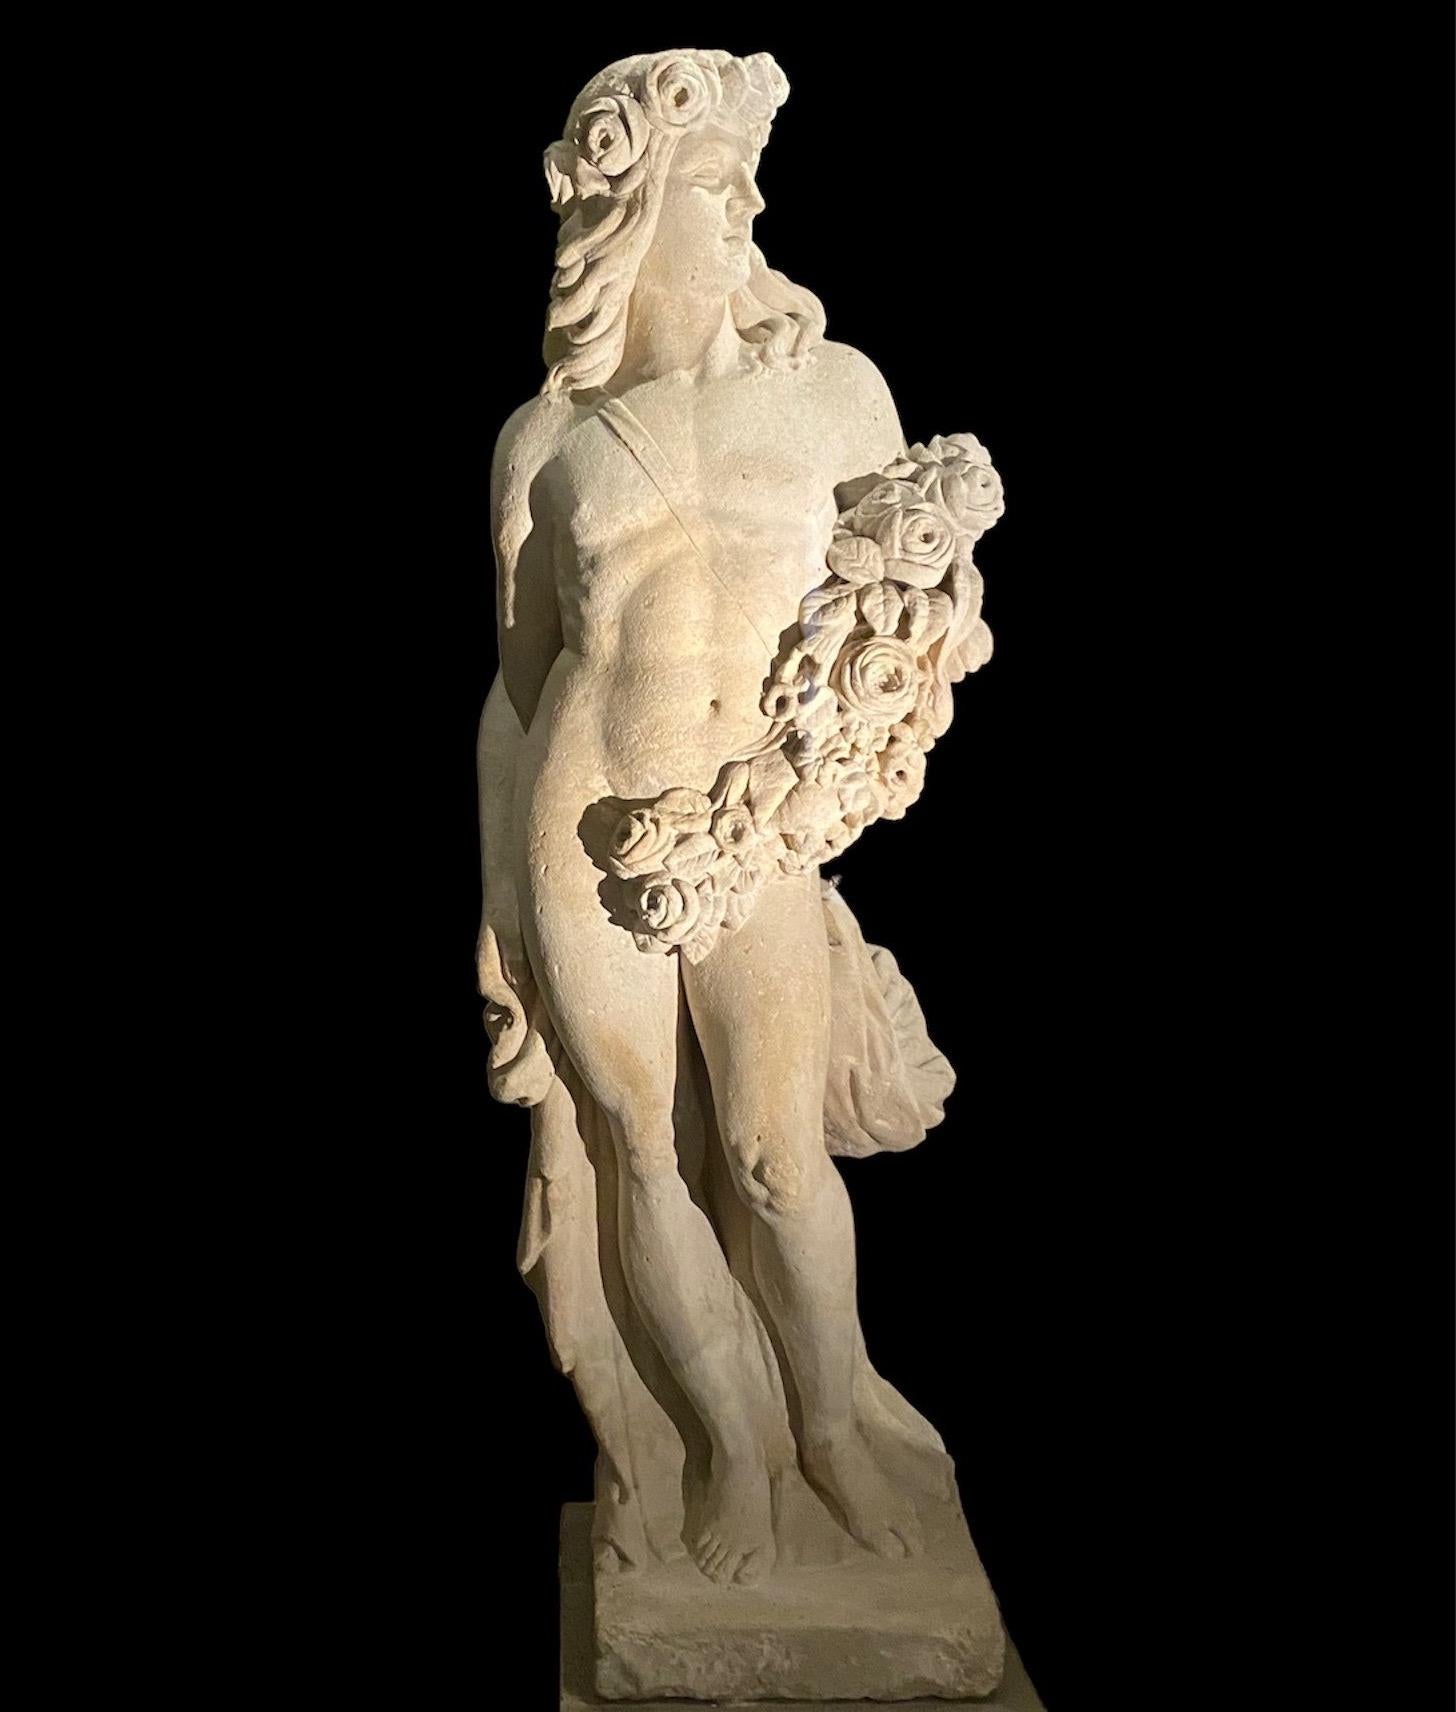 Unknown Nude Sculpture - Monumental Italian 18'century Stone Sculpture of Mythological subject Apollo